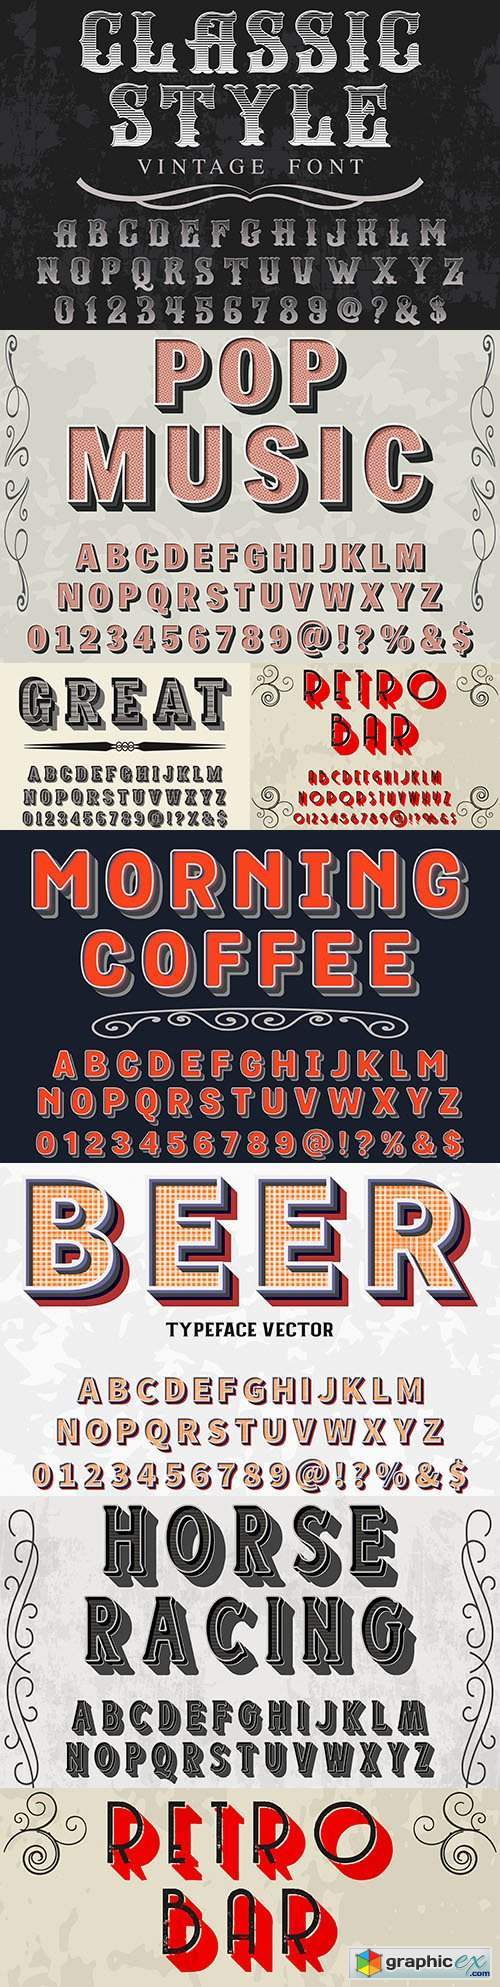 Editable font and alphabet retro illustration design